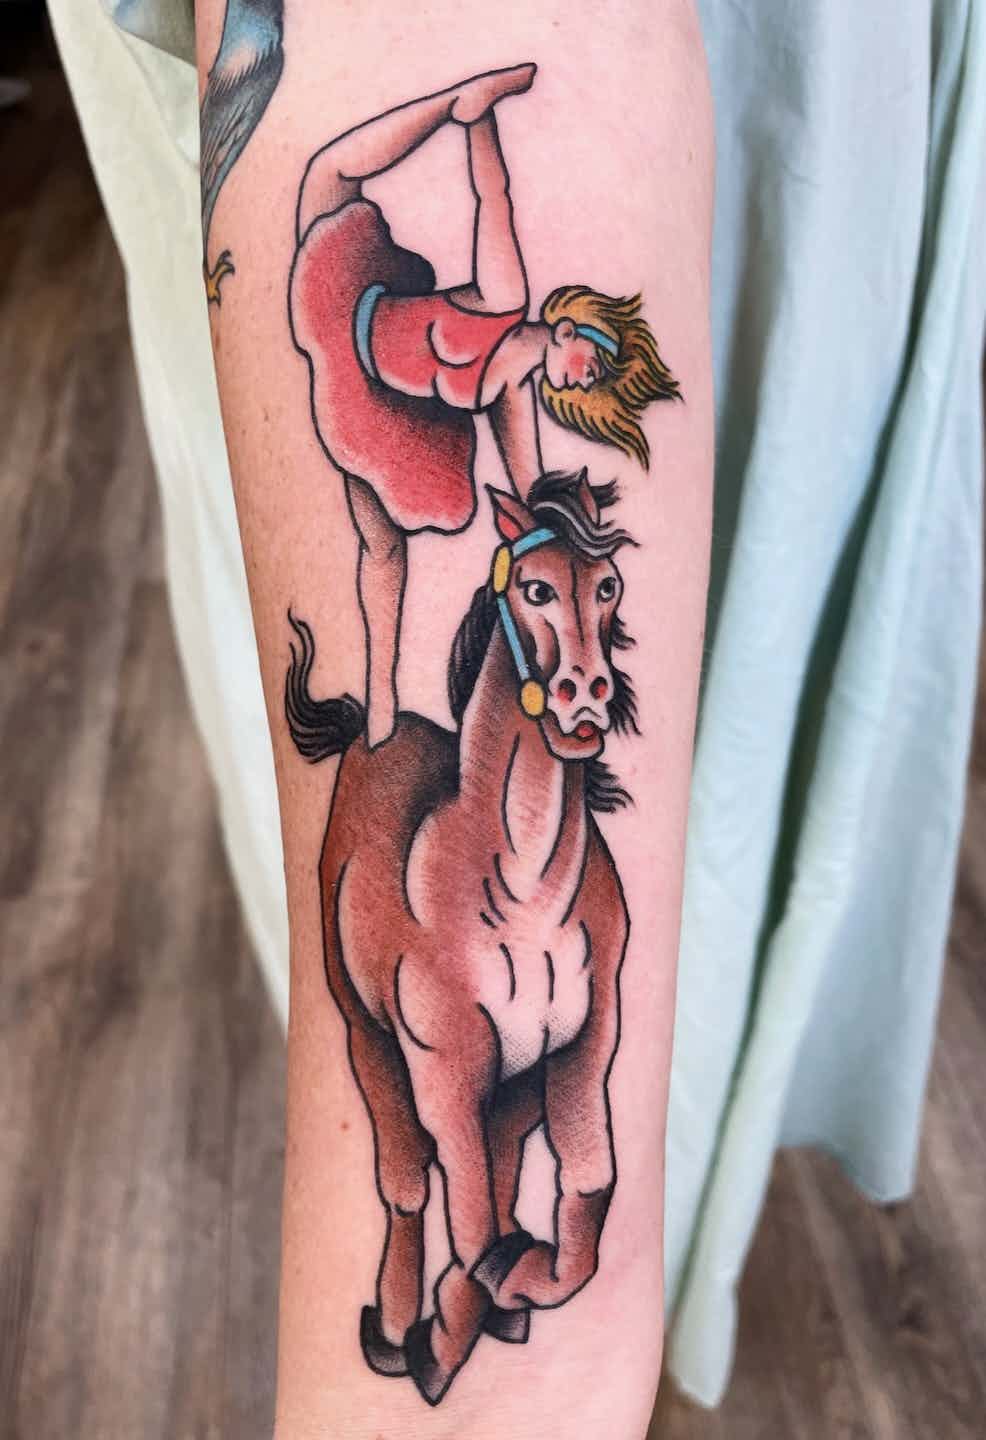 Circus horse rider tattoo